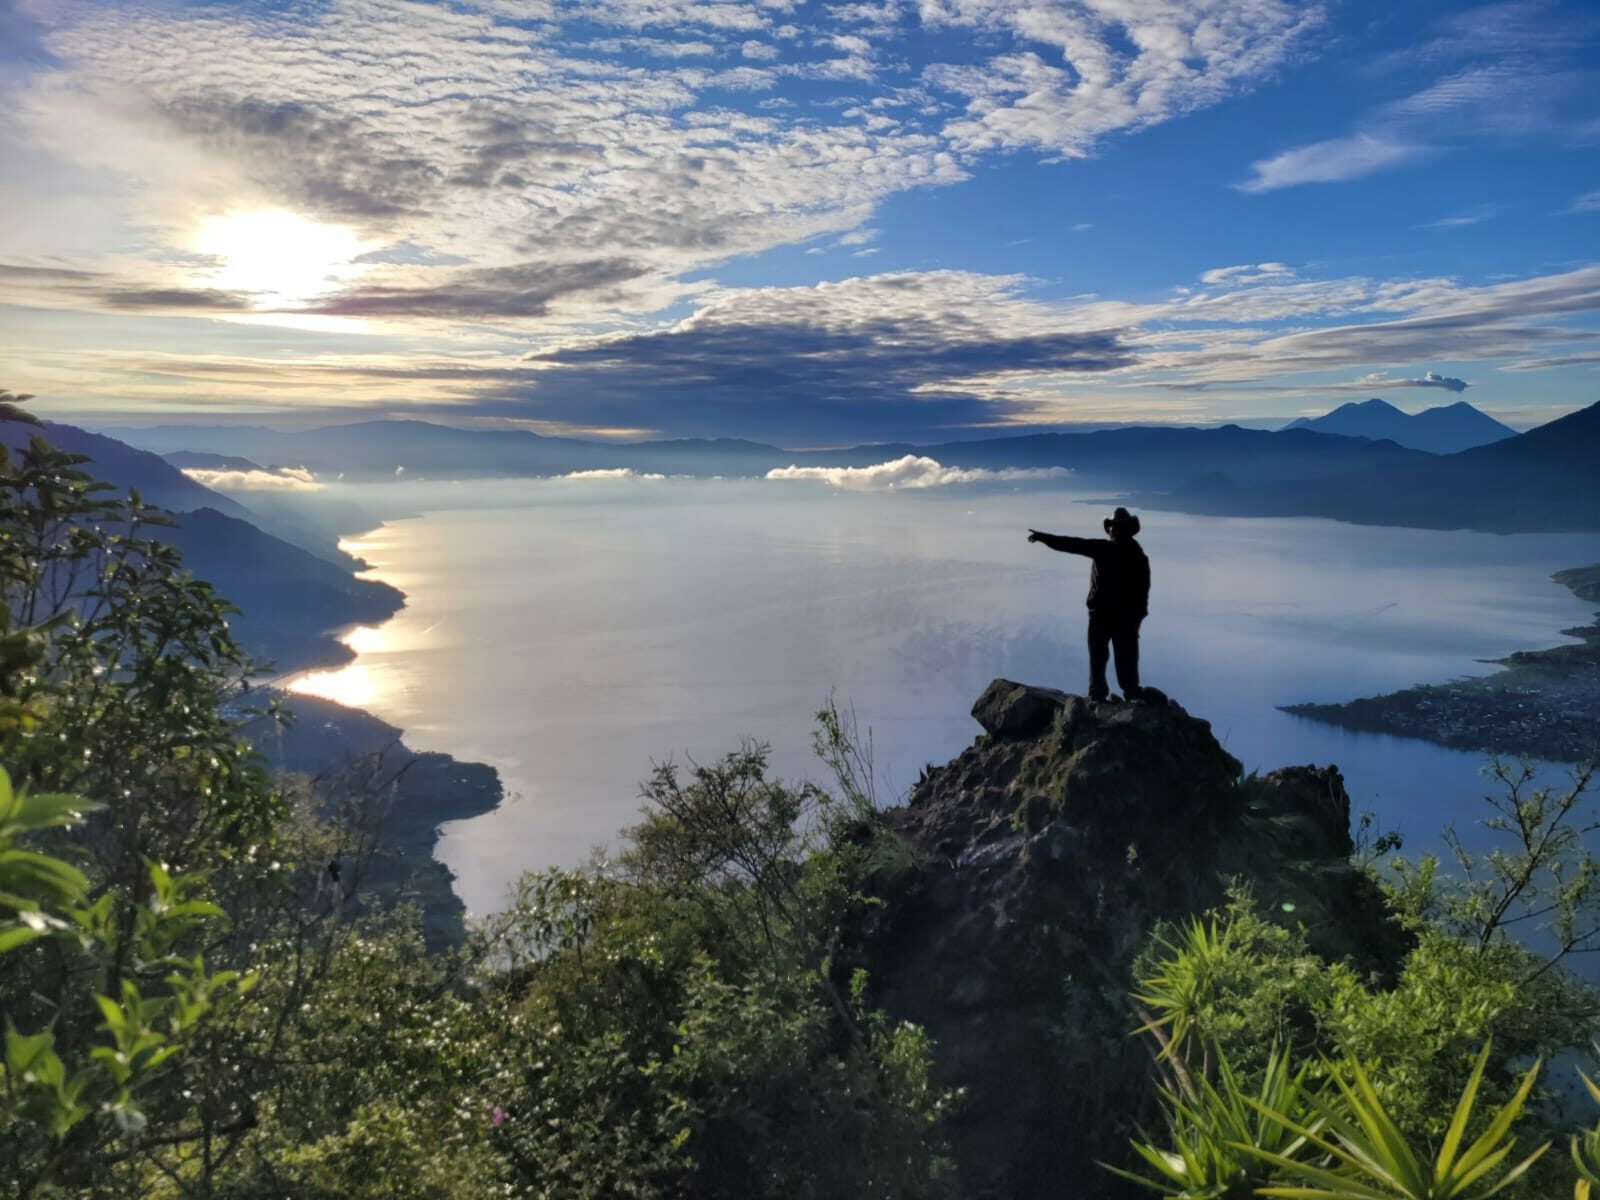 Explore Lake Atitlan